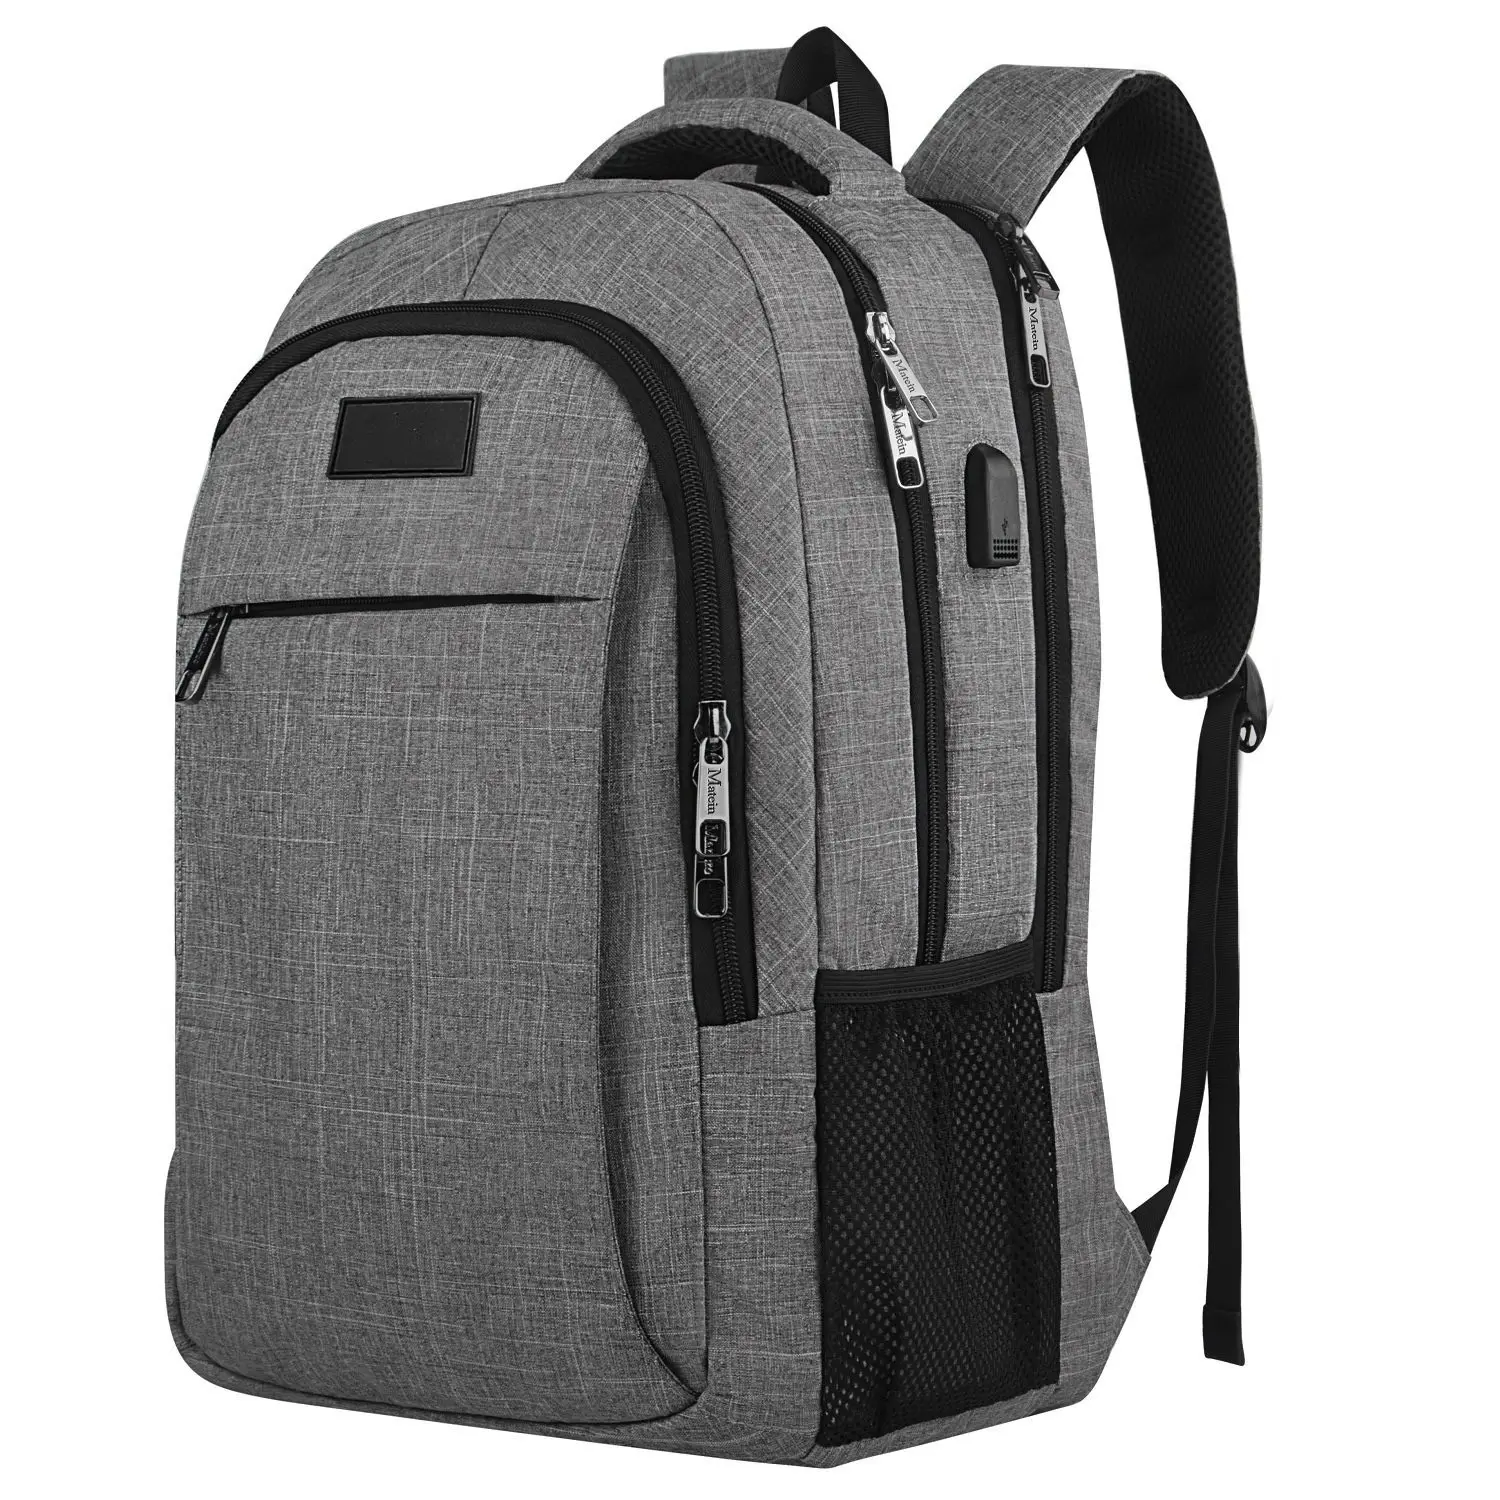 Bag School Bag USB Charging Travel Organizing School Bags For Laptop Waterproof Large School Backpack Bag For Boys